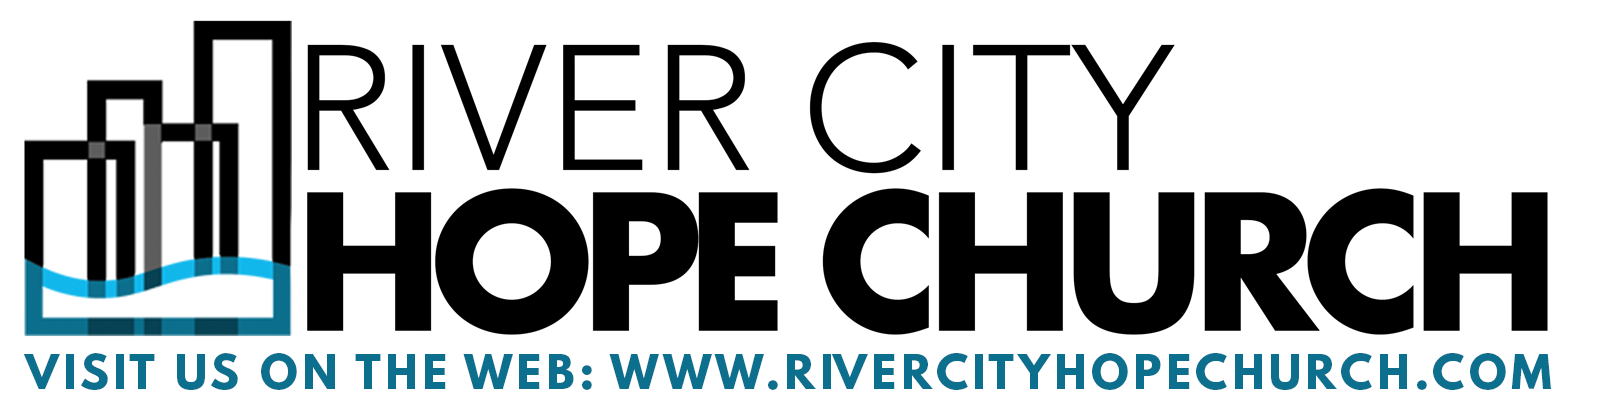 River City Hope Church